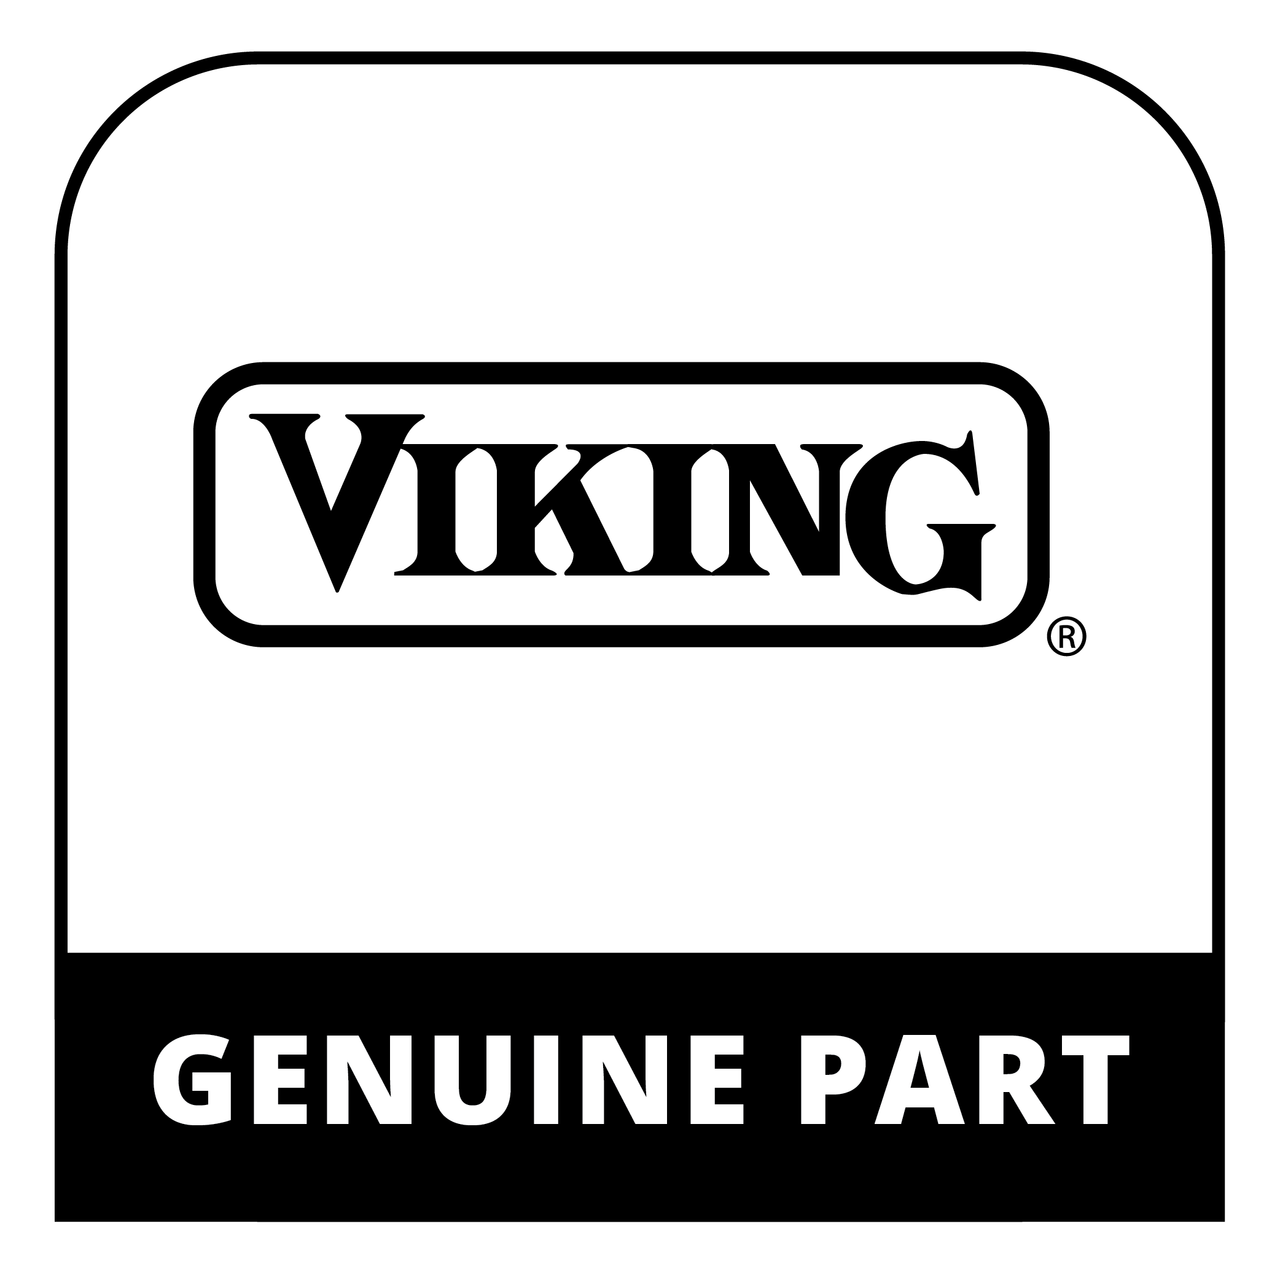 Viking 061598-000 - Icemaker Asm, 7 Series - Genuine Viking Part